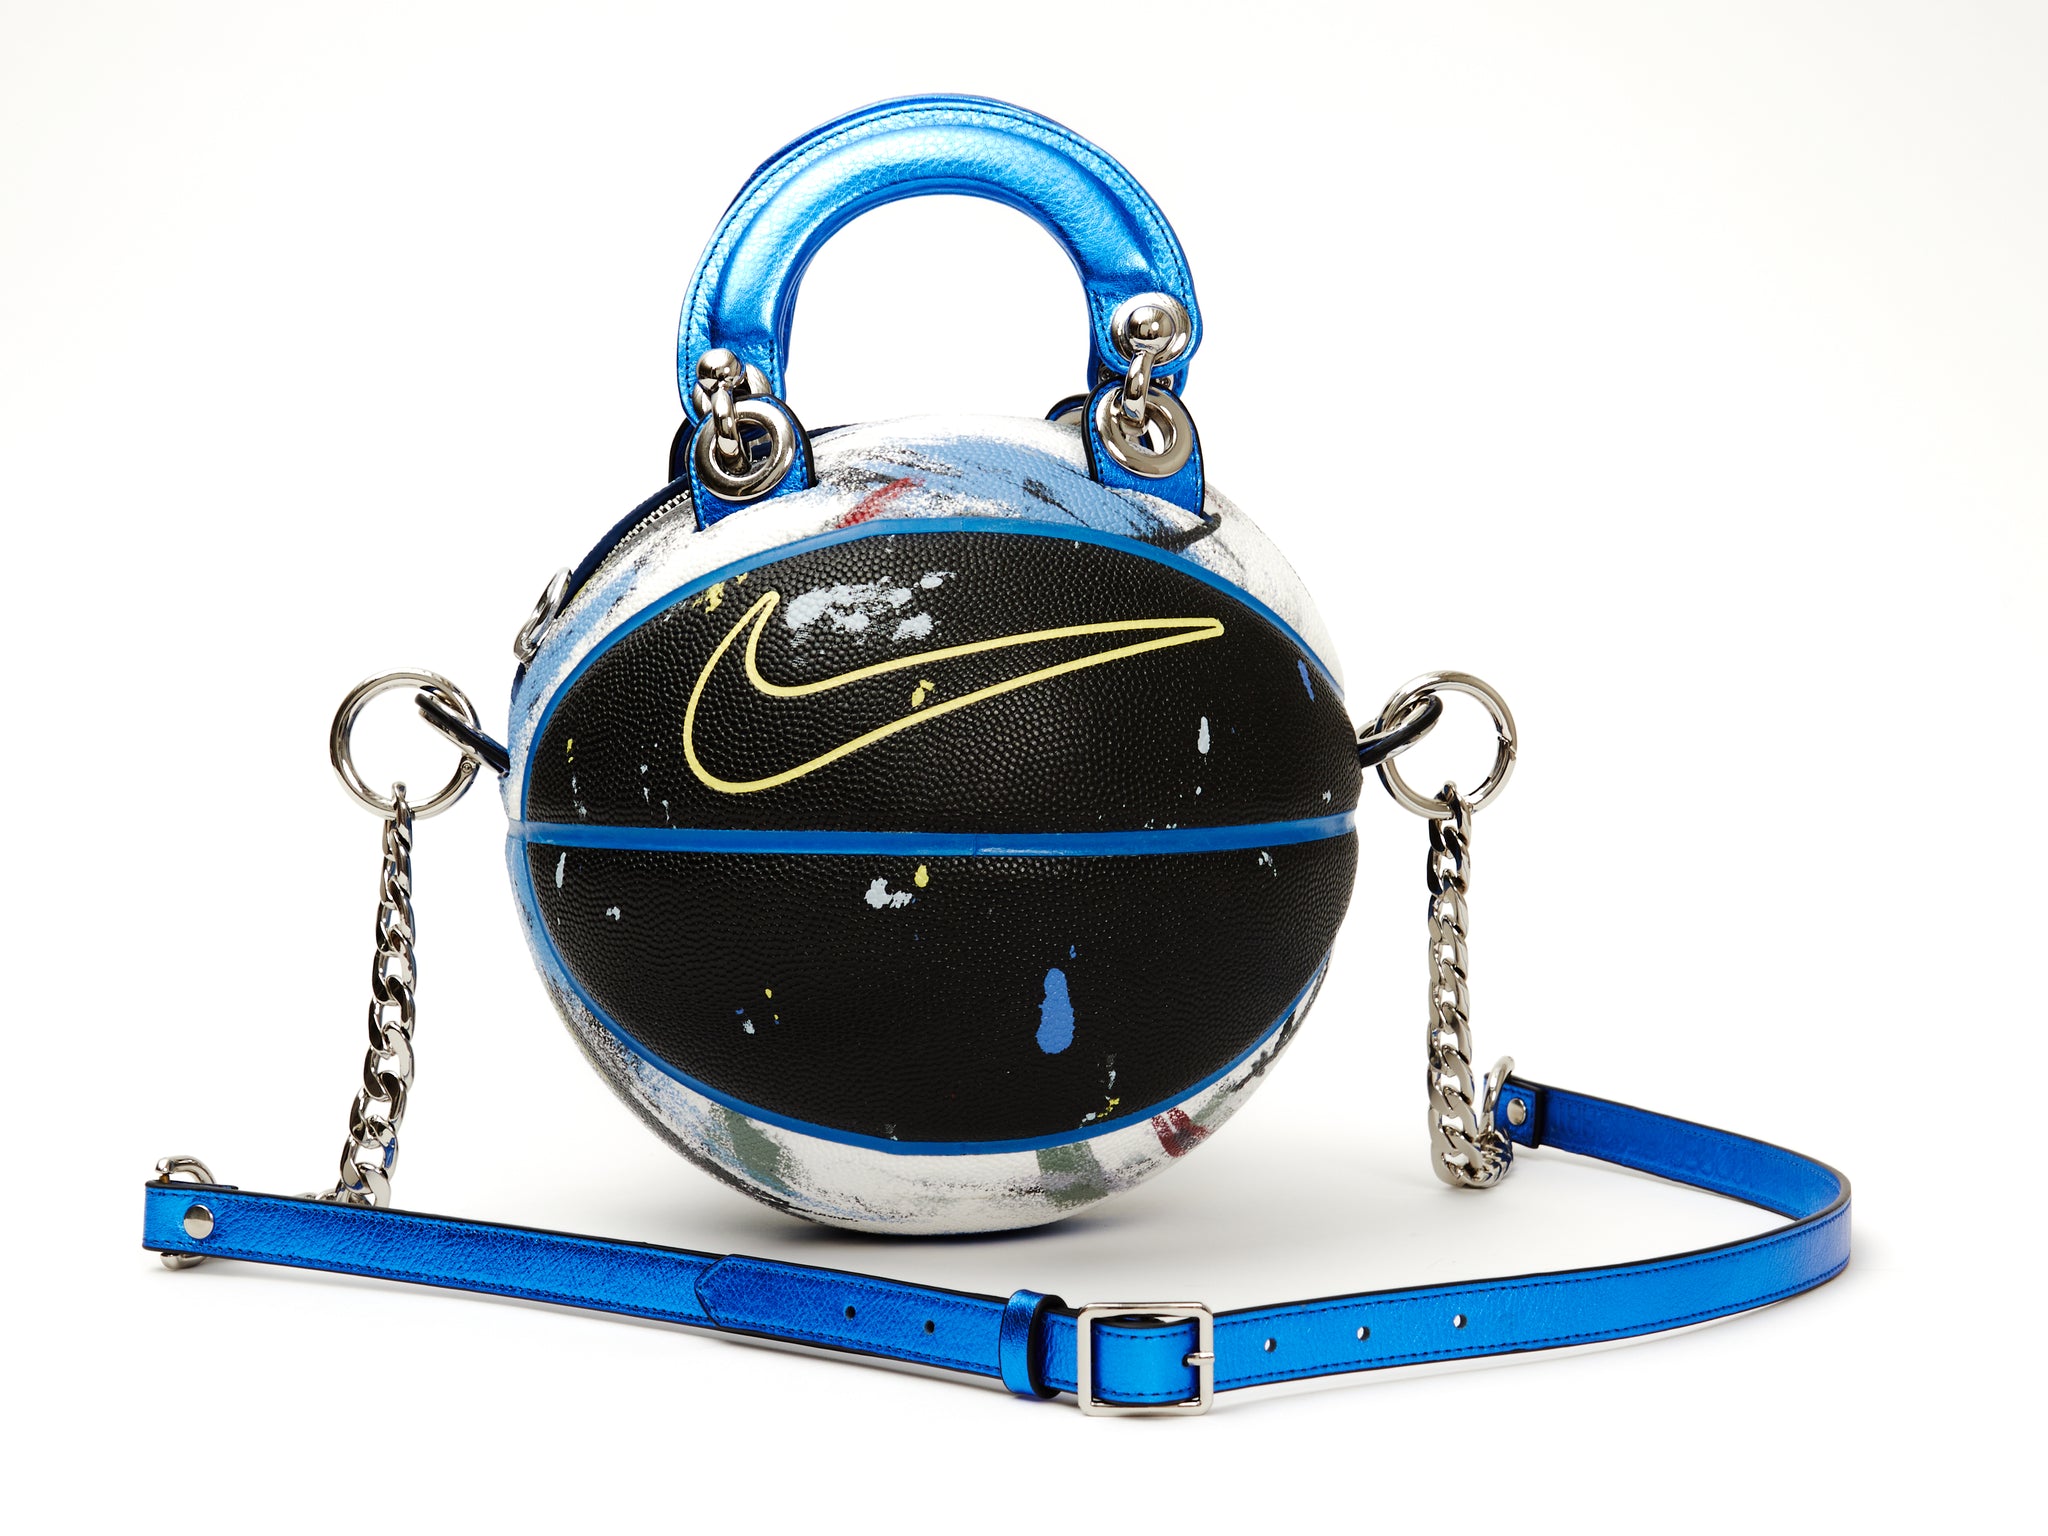 Andrea Bergart's Basketball Purse and Sport Inspired Handbags